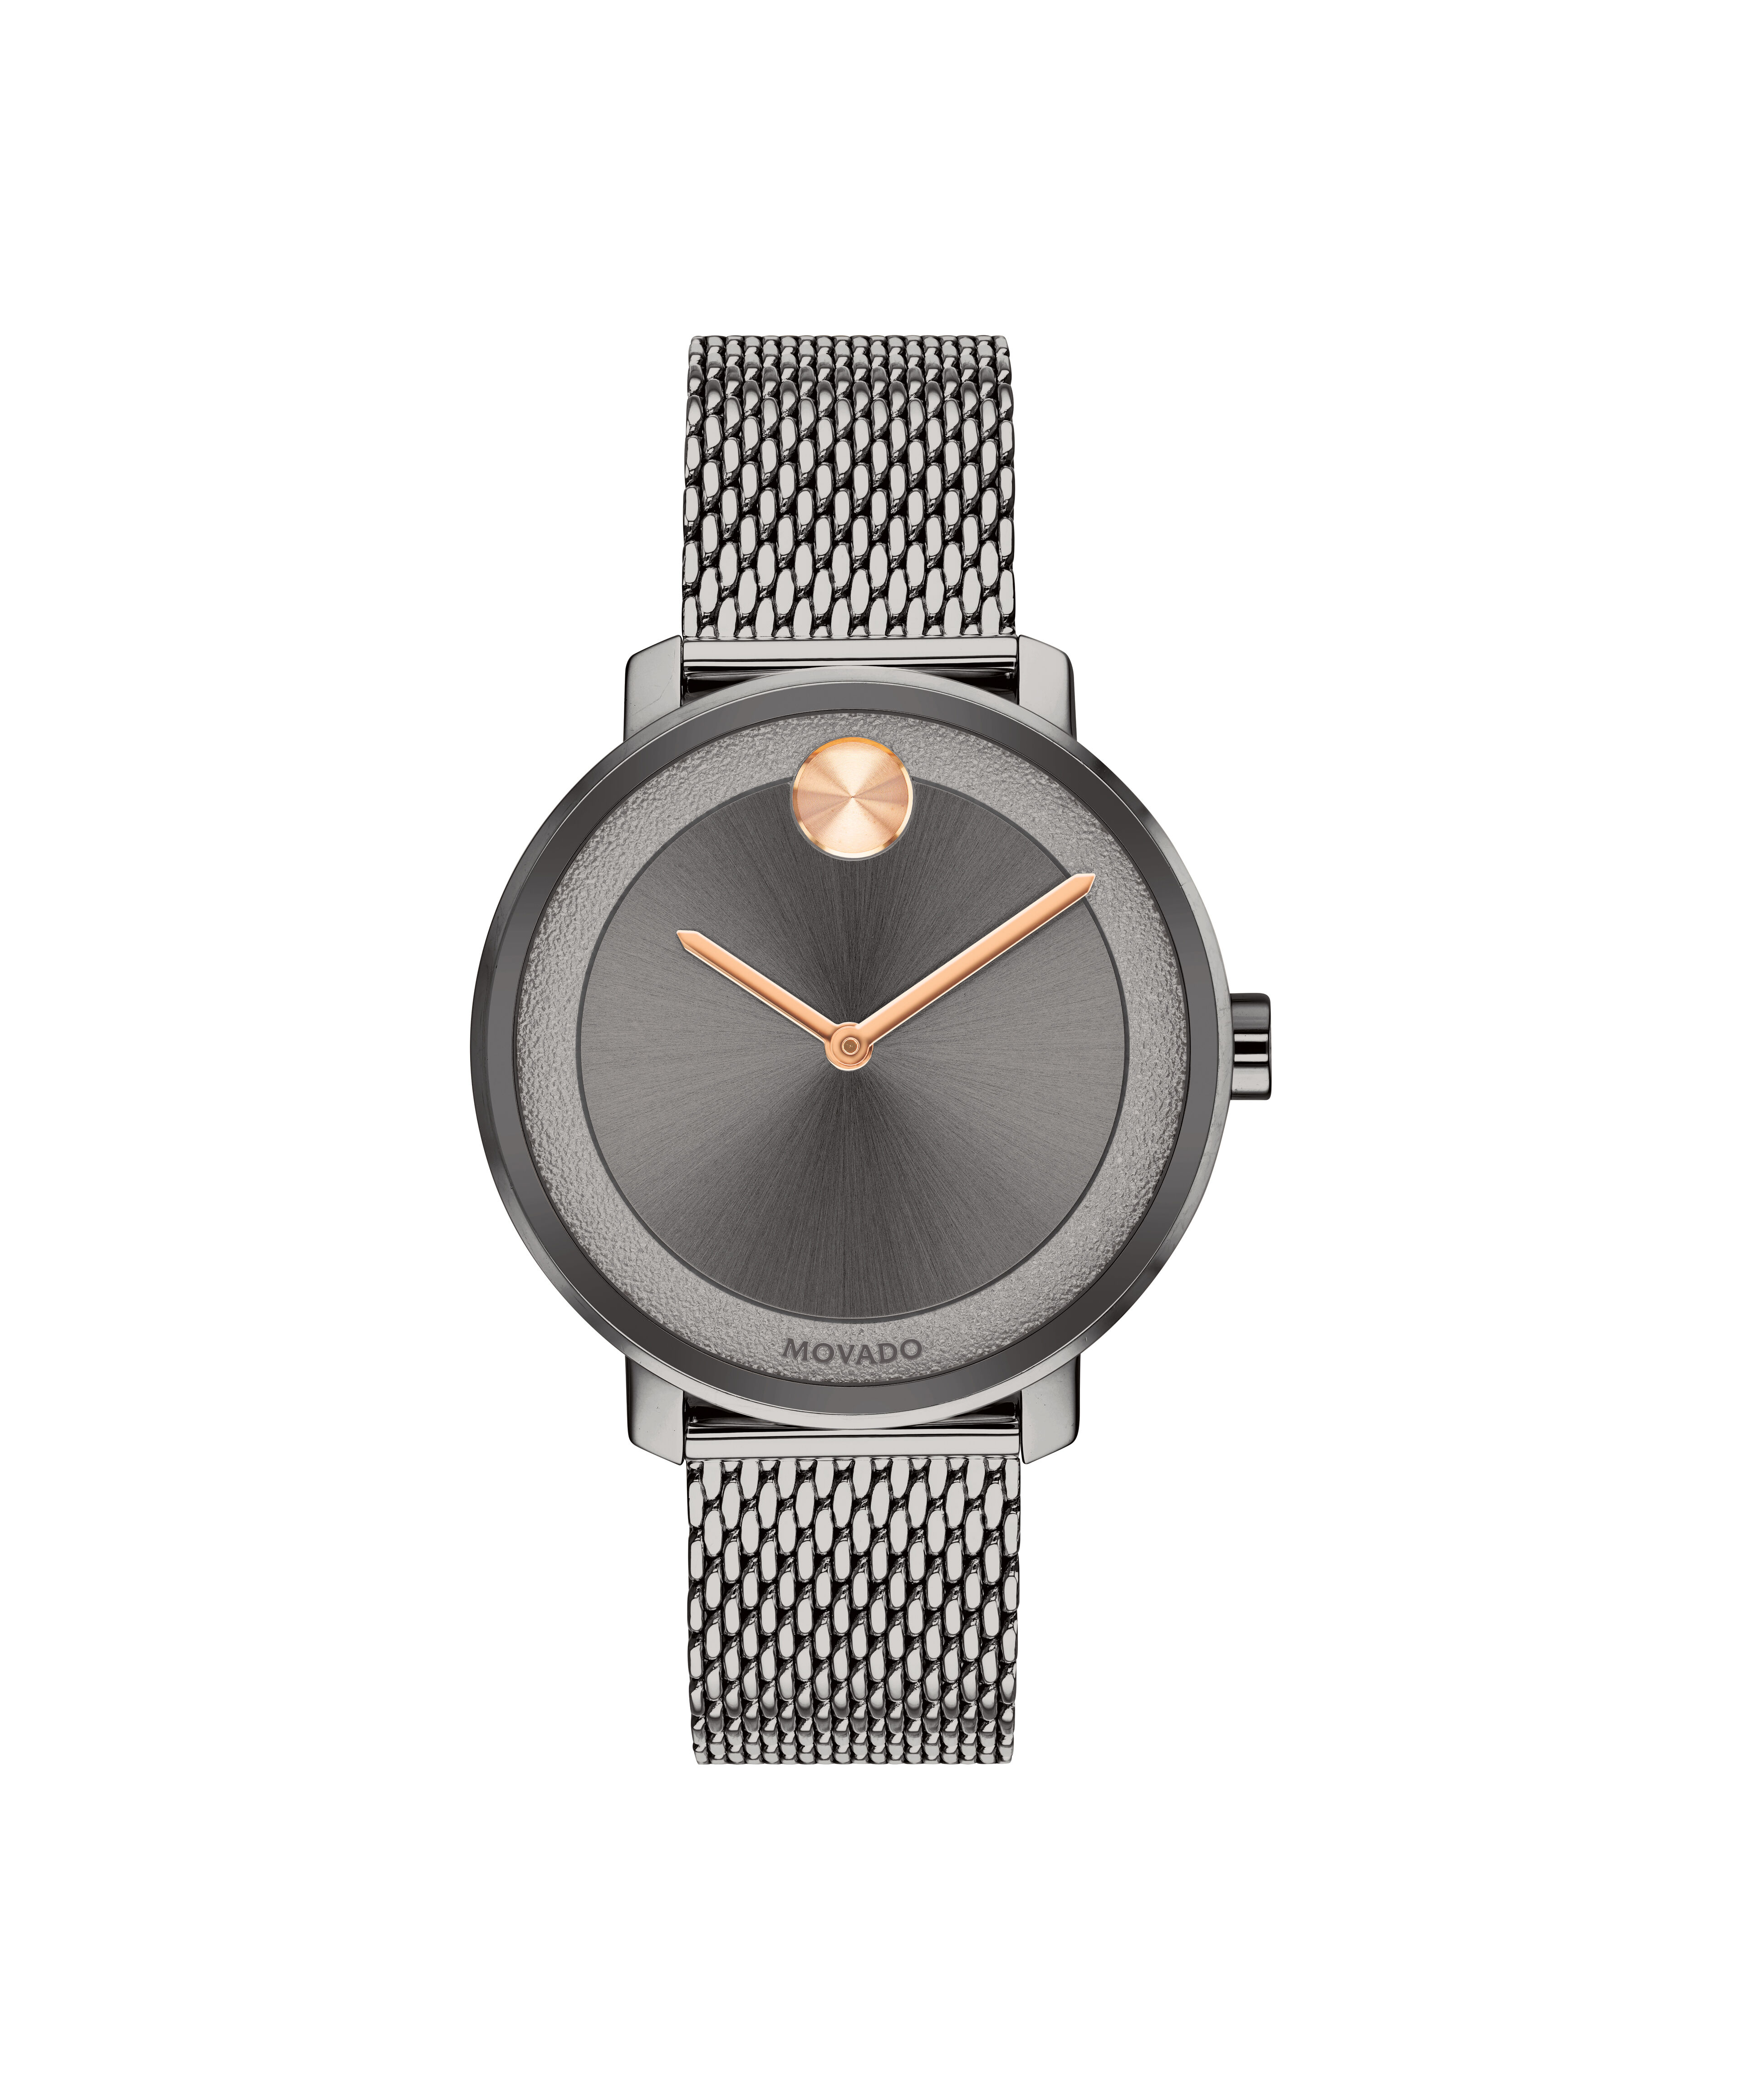 Replica Patek Philippe Nautilus Chronograph 40th Anniversary Limited Edition Watch